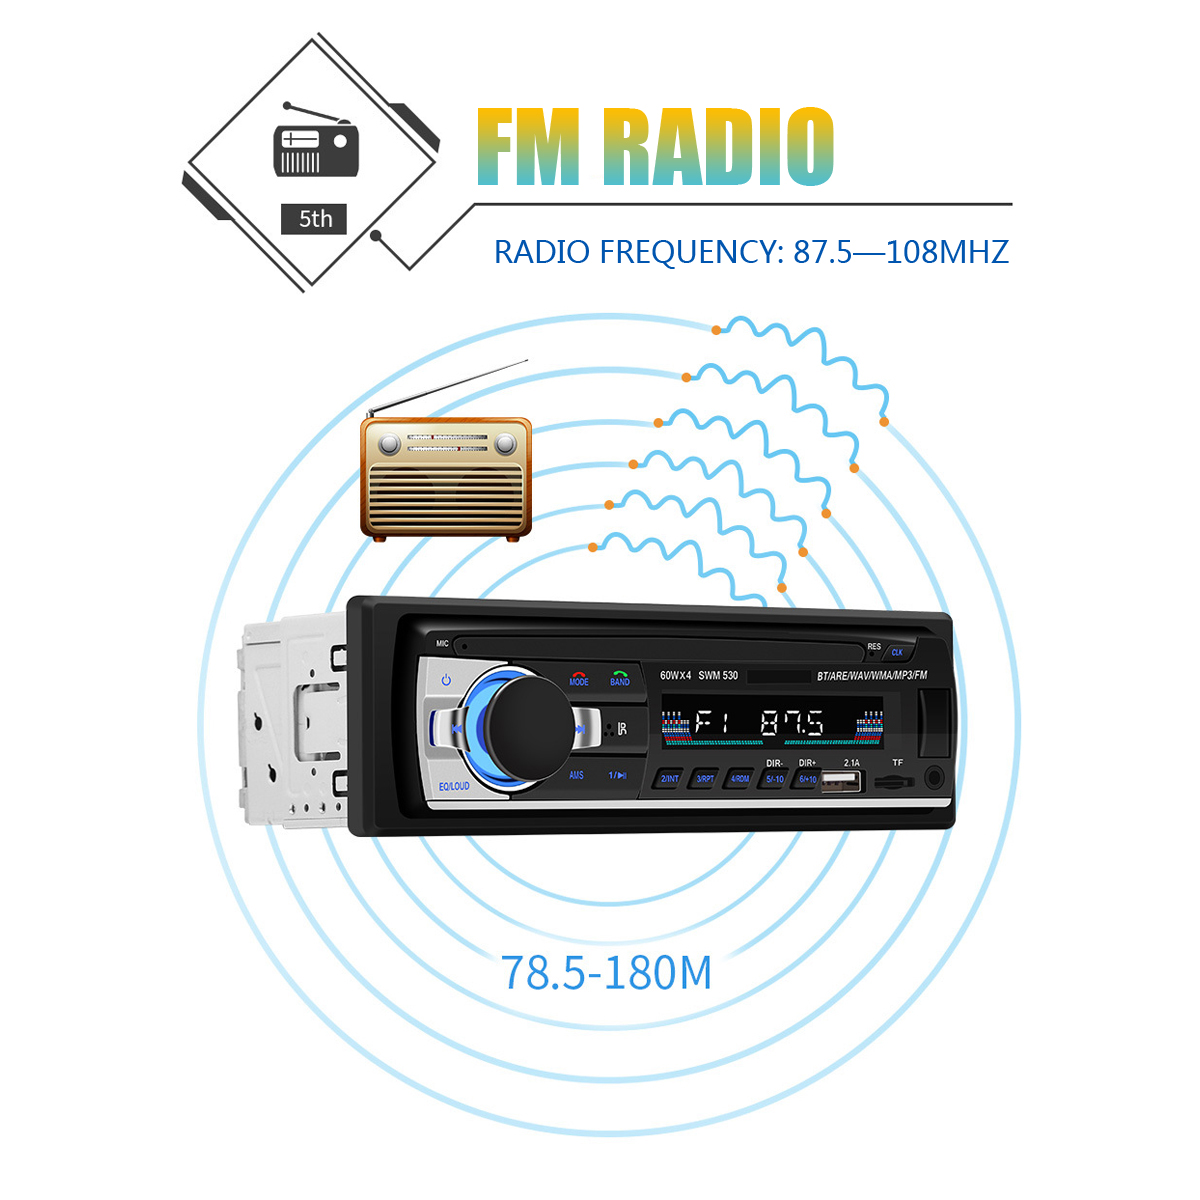 SWM-530-Remote-Control-bluetooth-Handsfree-Car-Radio-MP3-Player-1463007